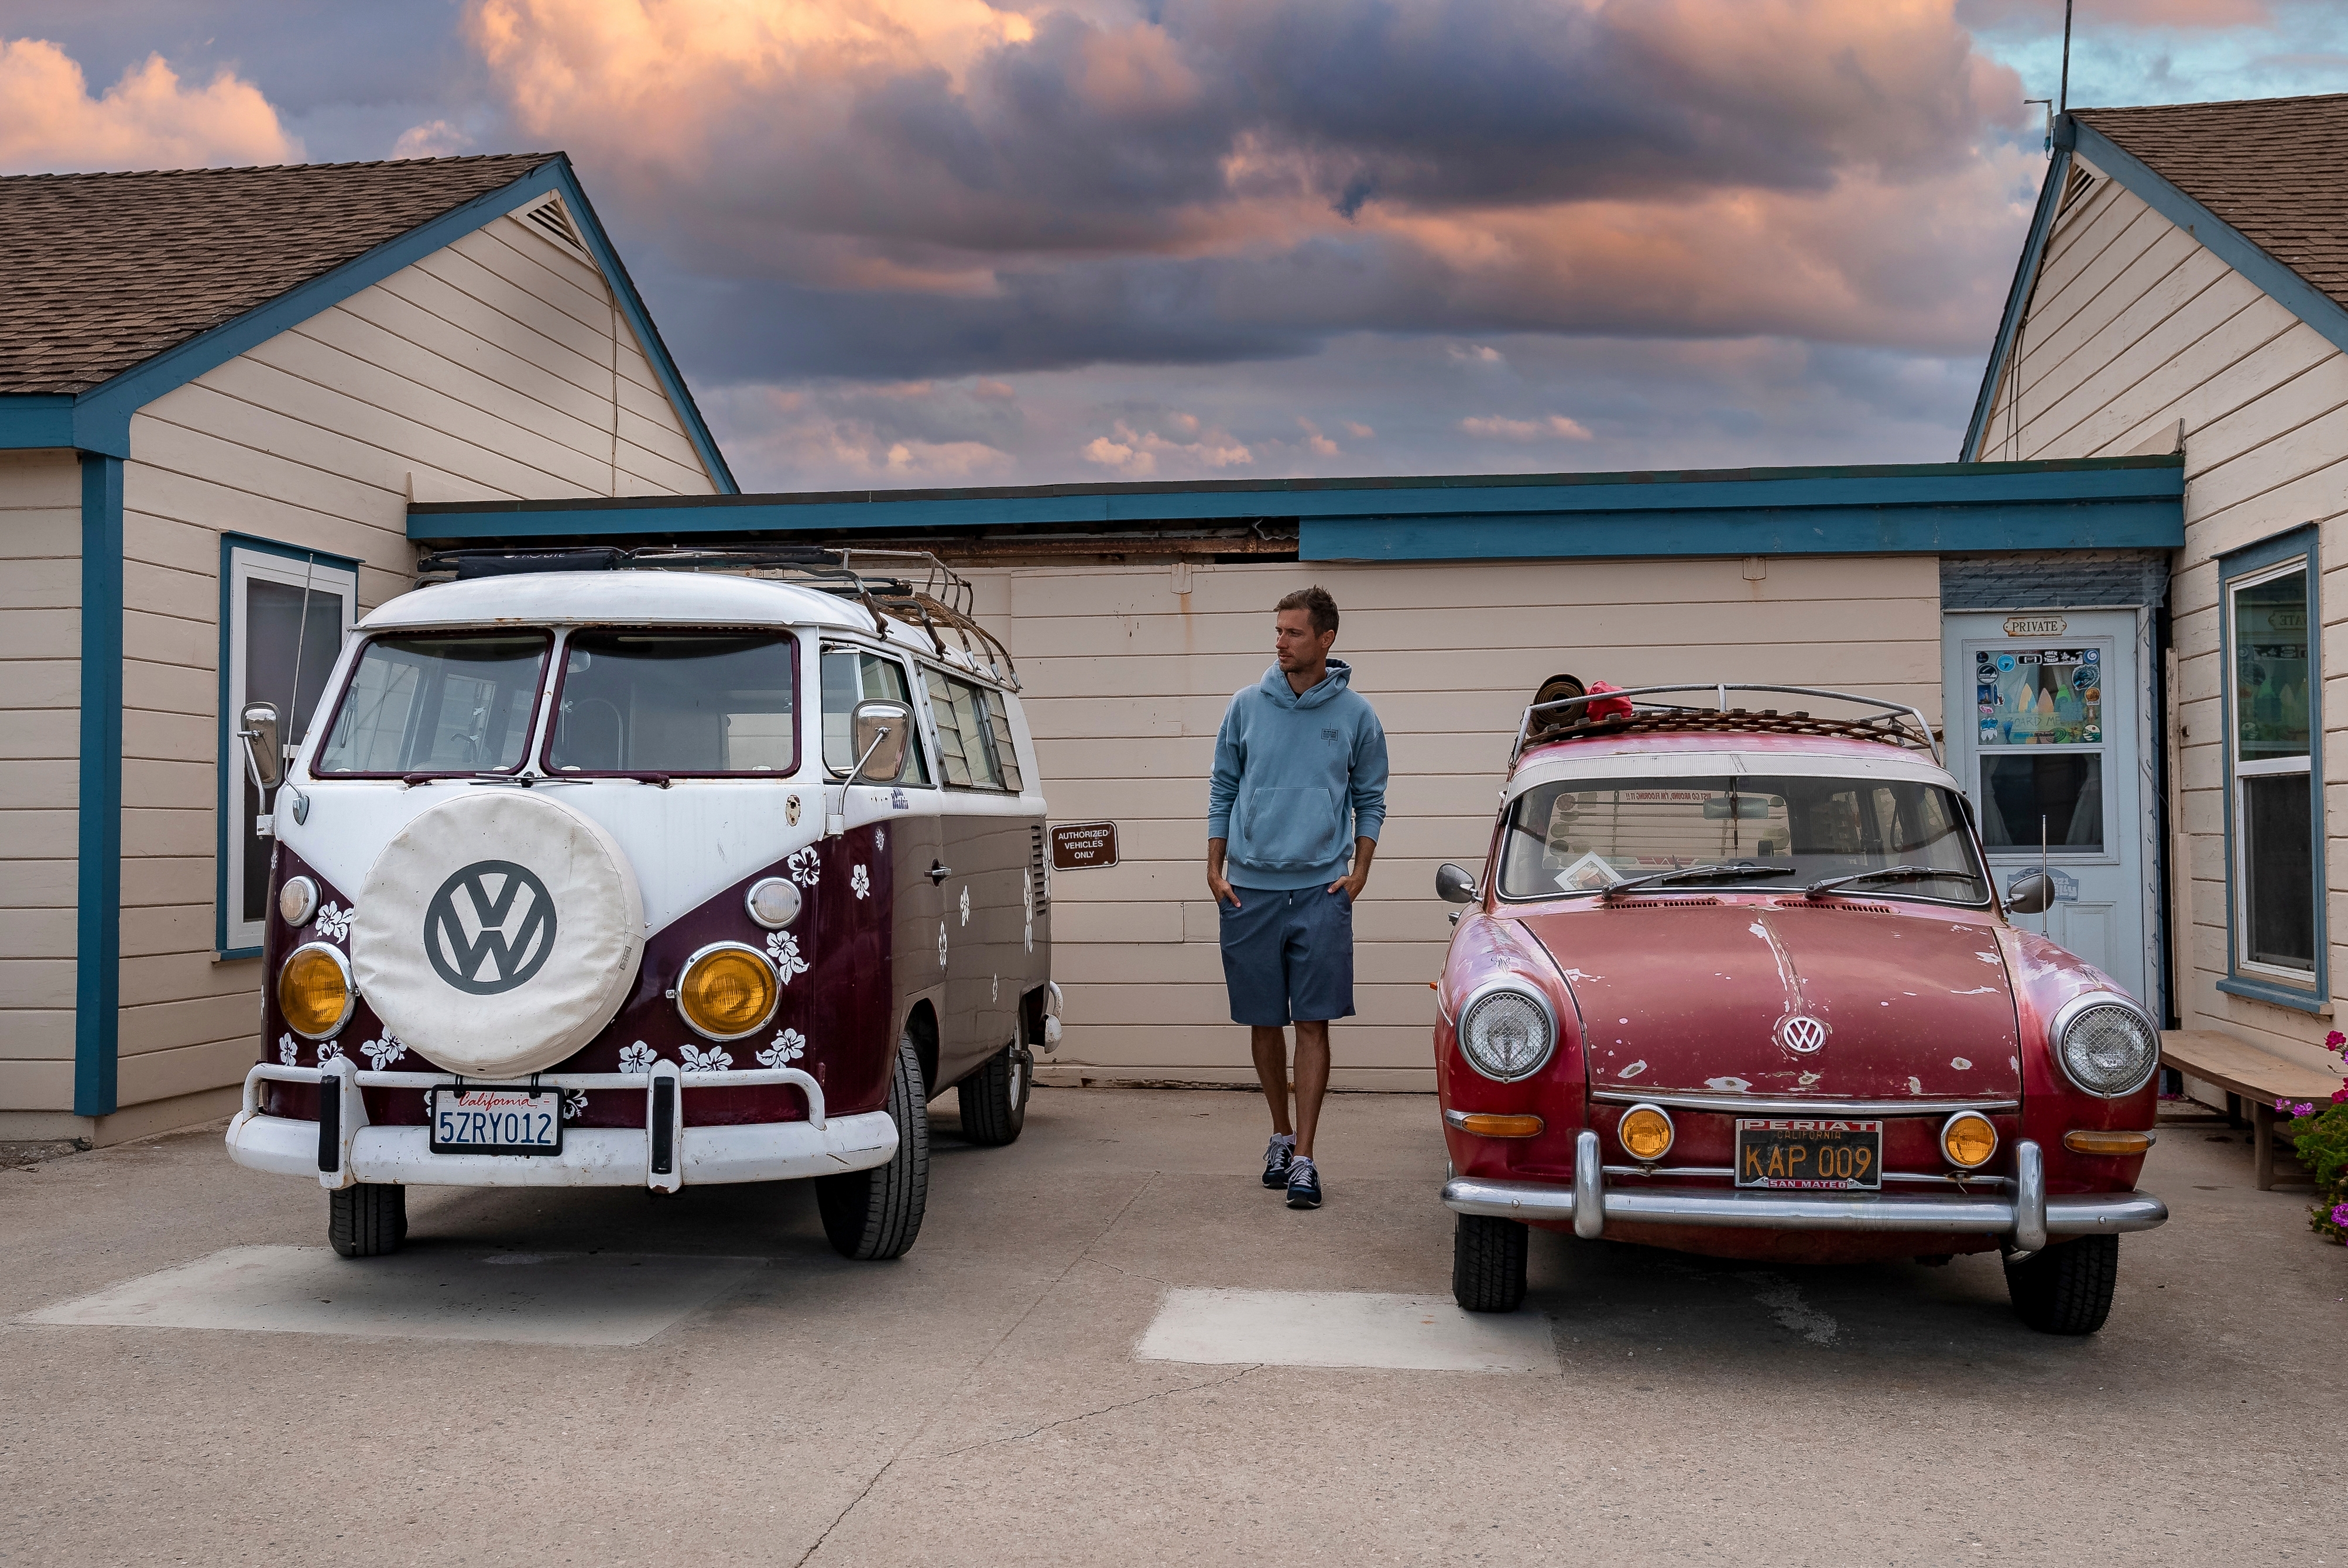 A man standing between vintage cars | Source: Shutterstock